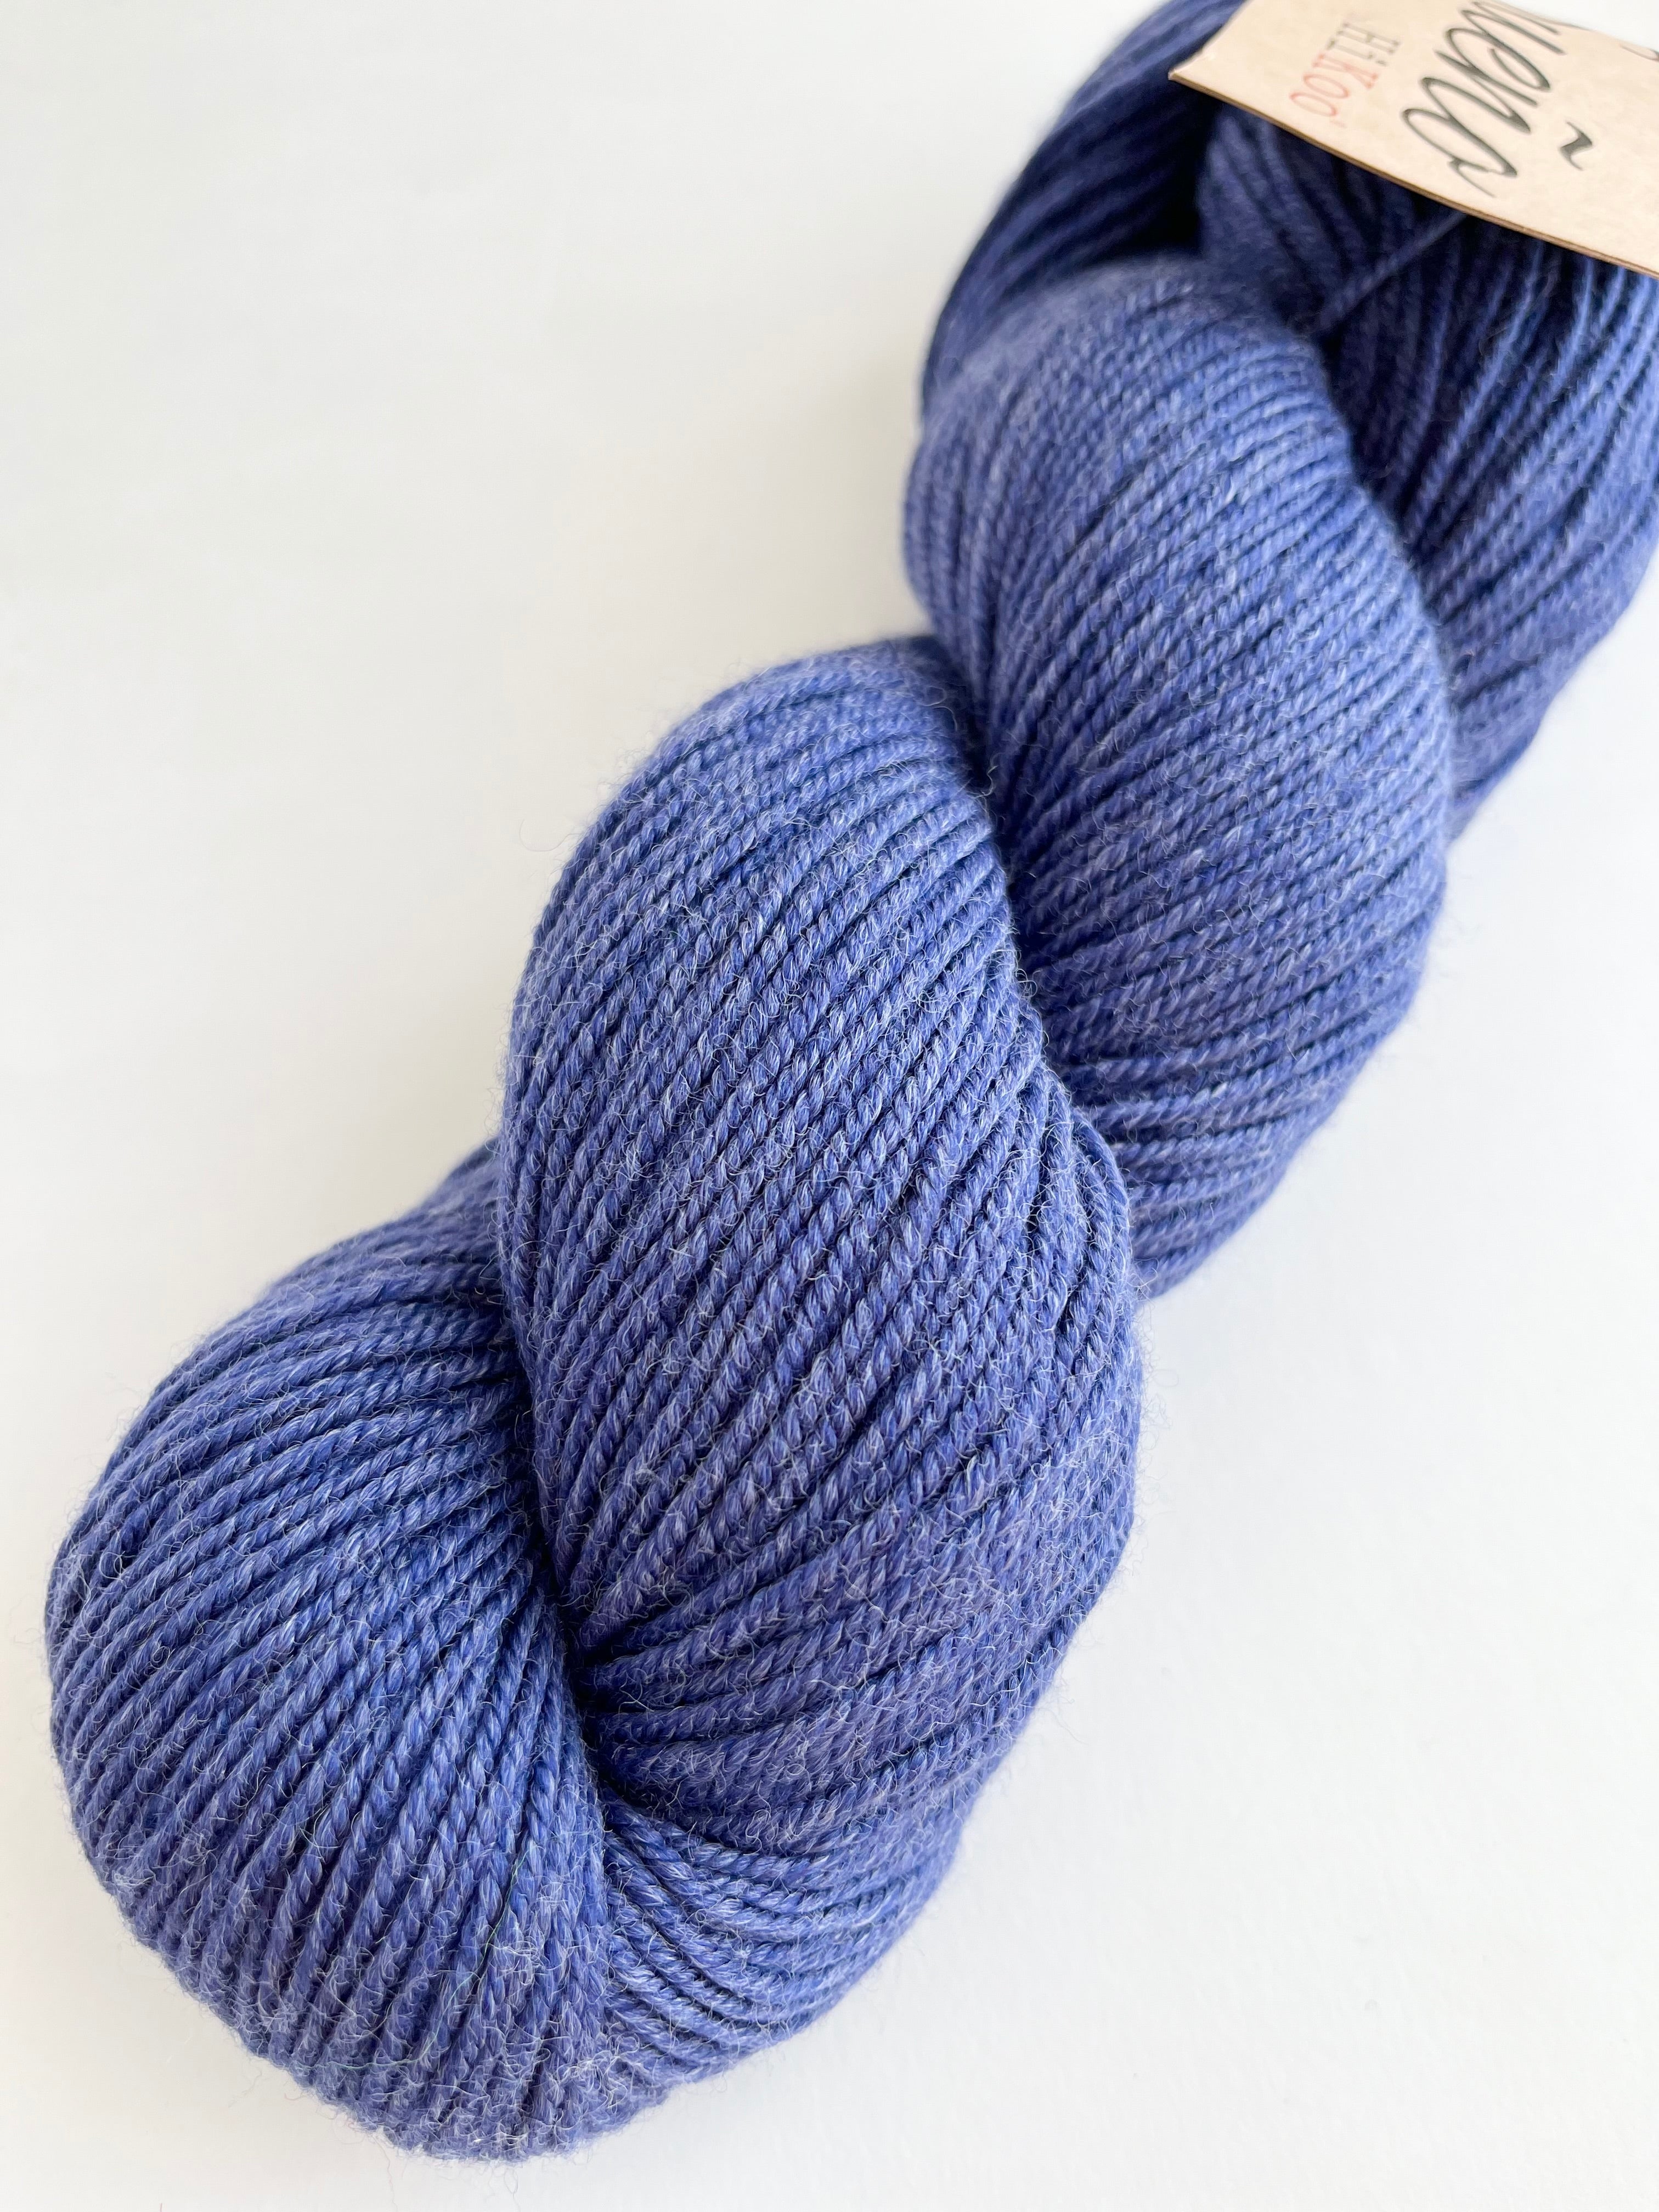 Denim - Sueño yarn from HiKoo